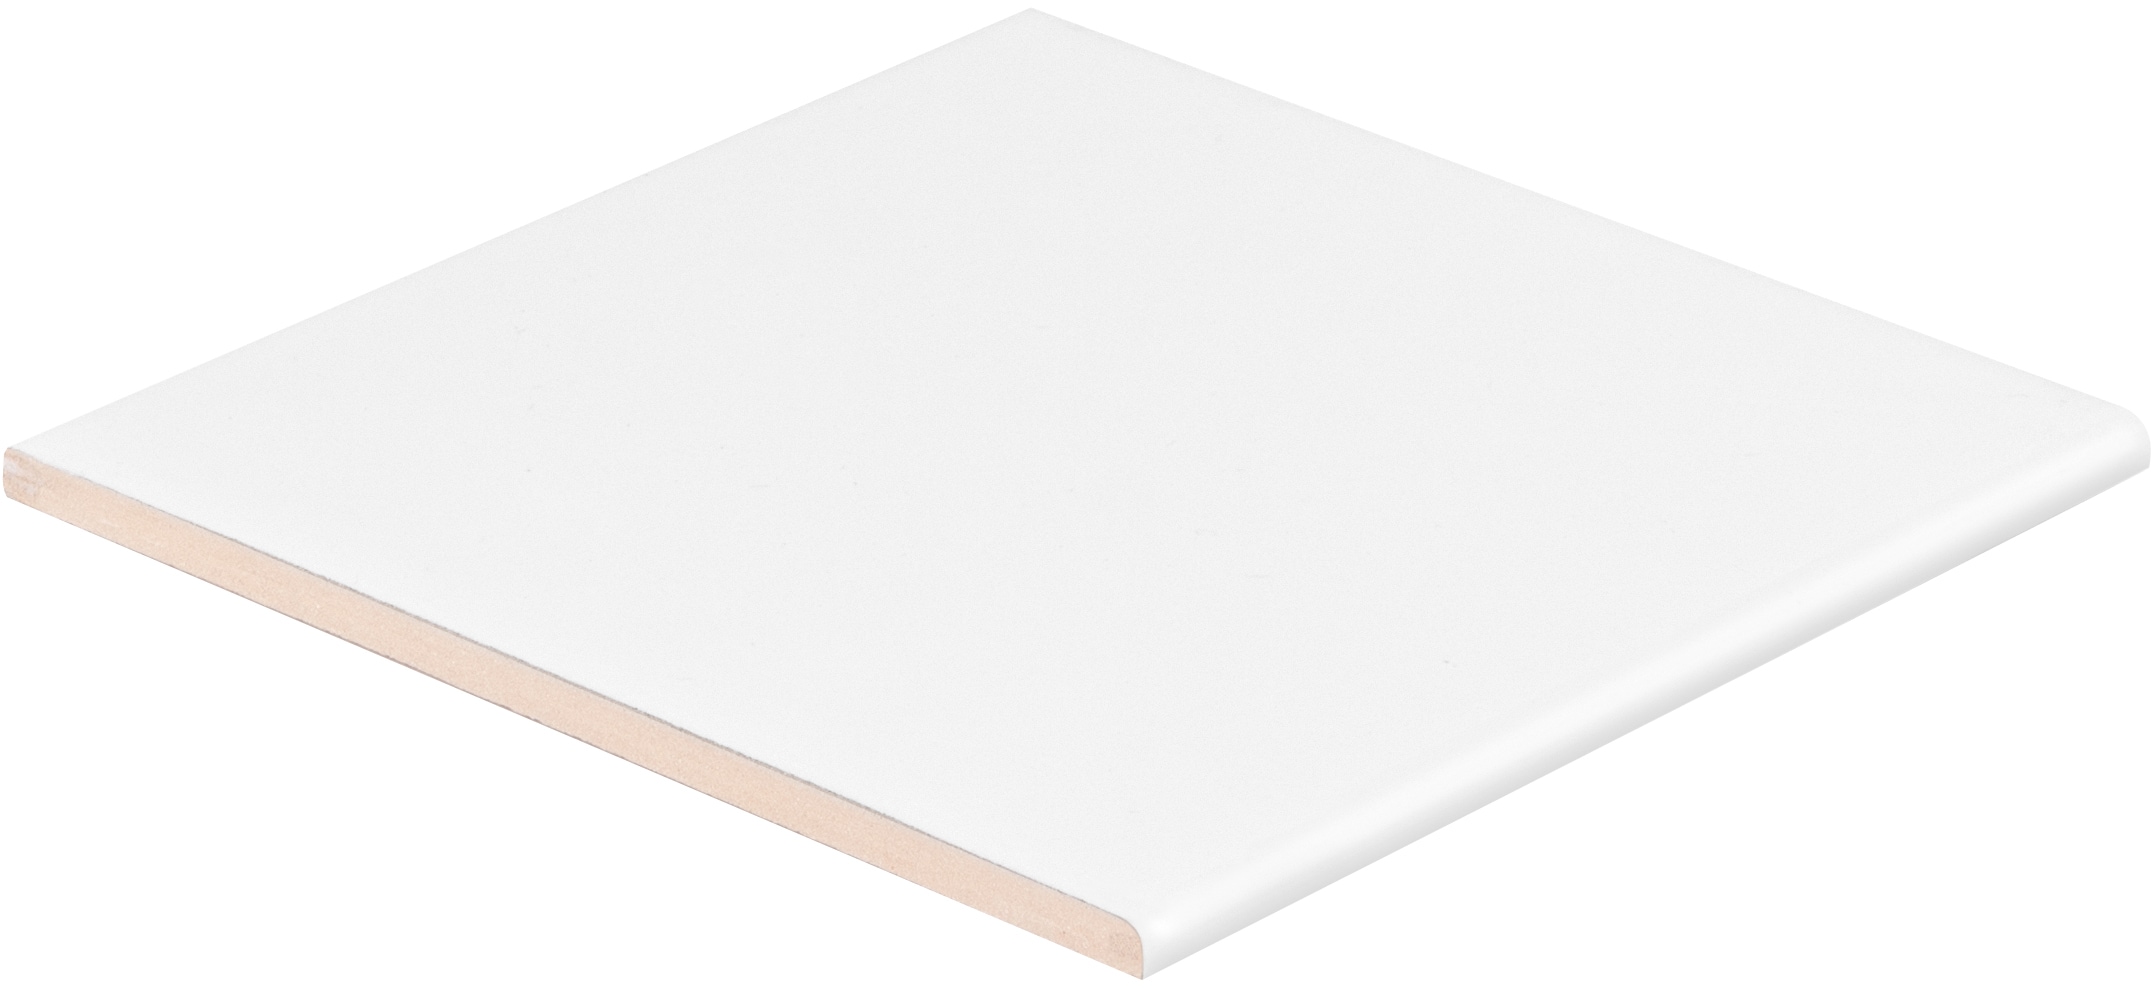 10pk White Foamcore Pouch Boards with Pressure-Sensitive Adhesive